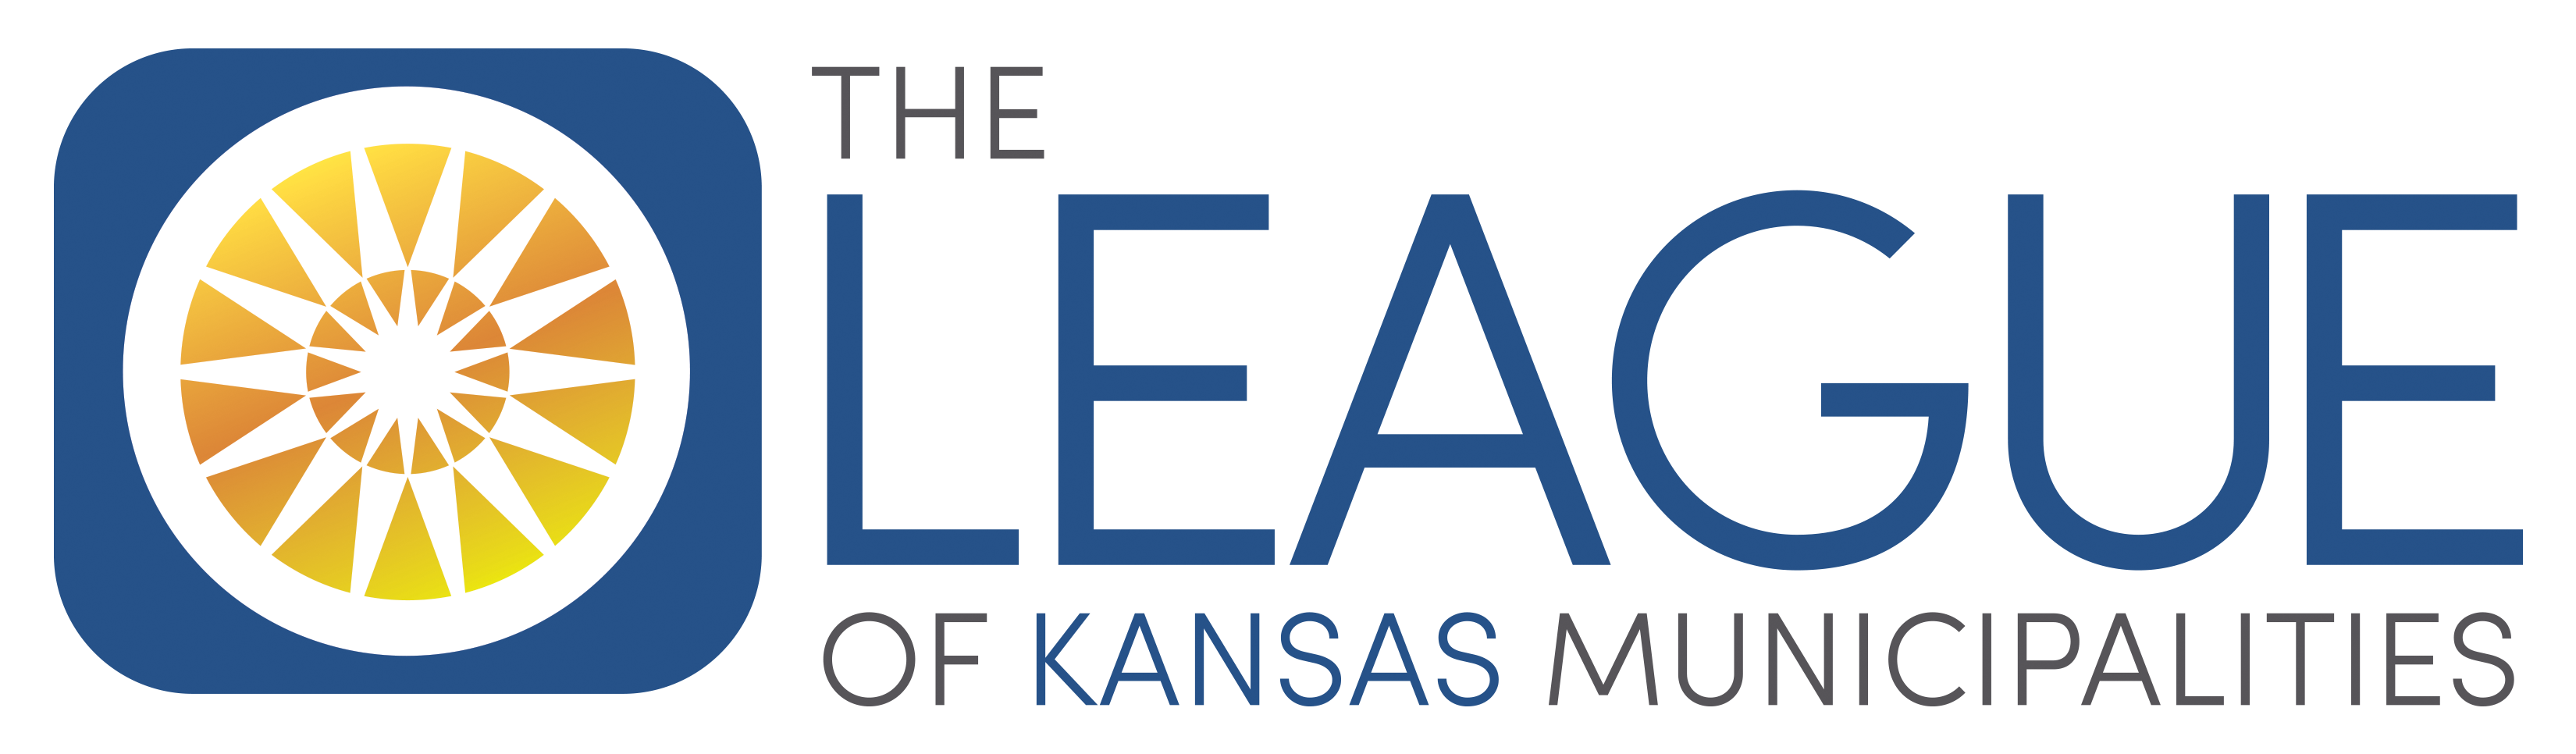 The League of Kansas Municipalities